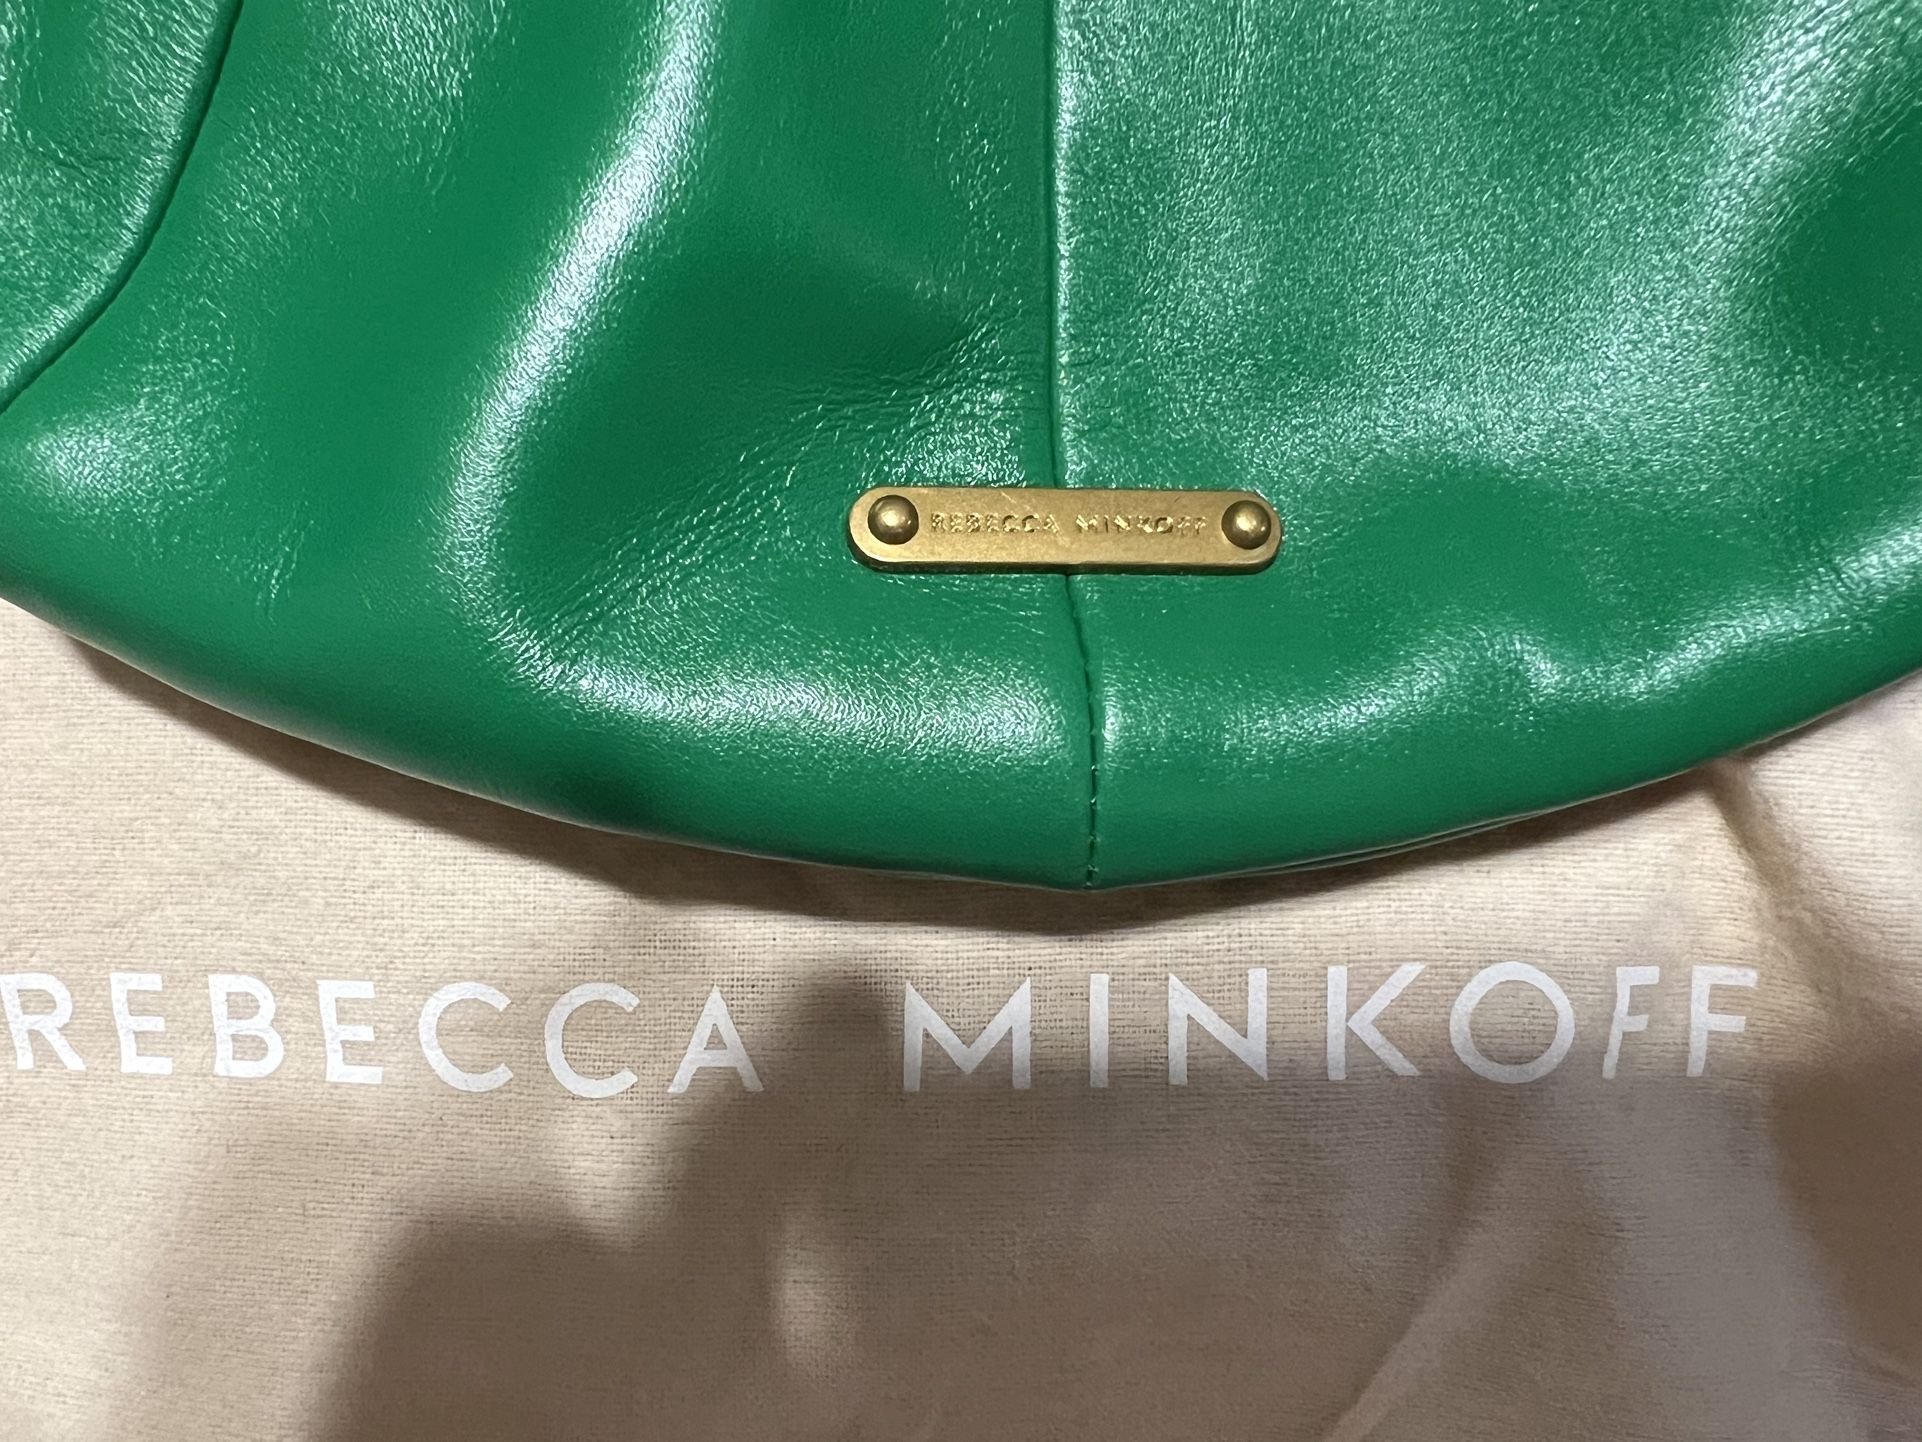 Rebecca Minkoff Zip Around Croissant Leather Hobo Bag - Rocher